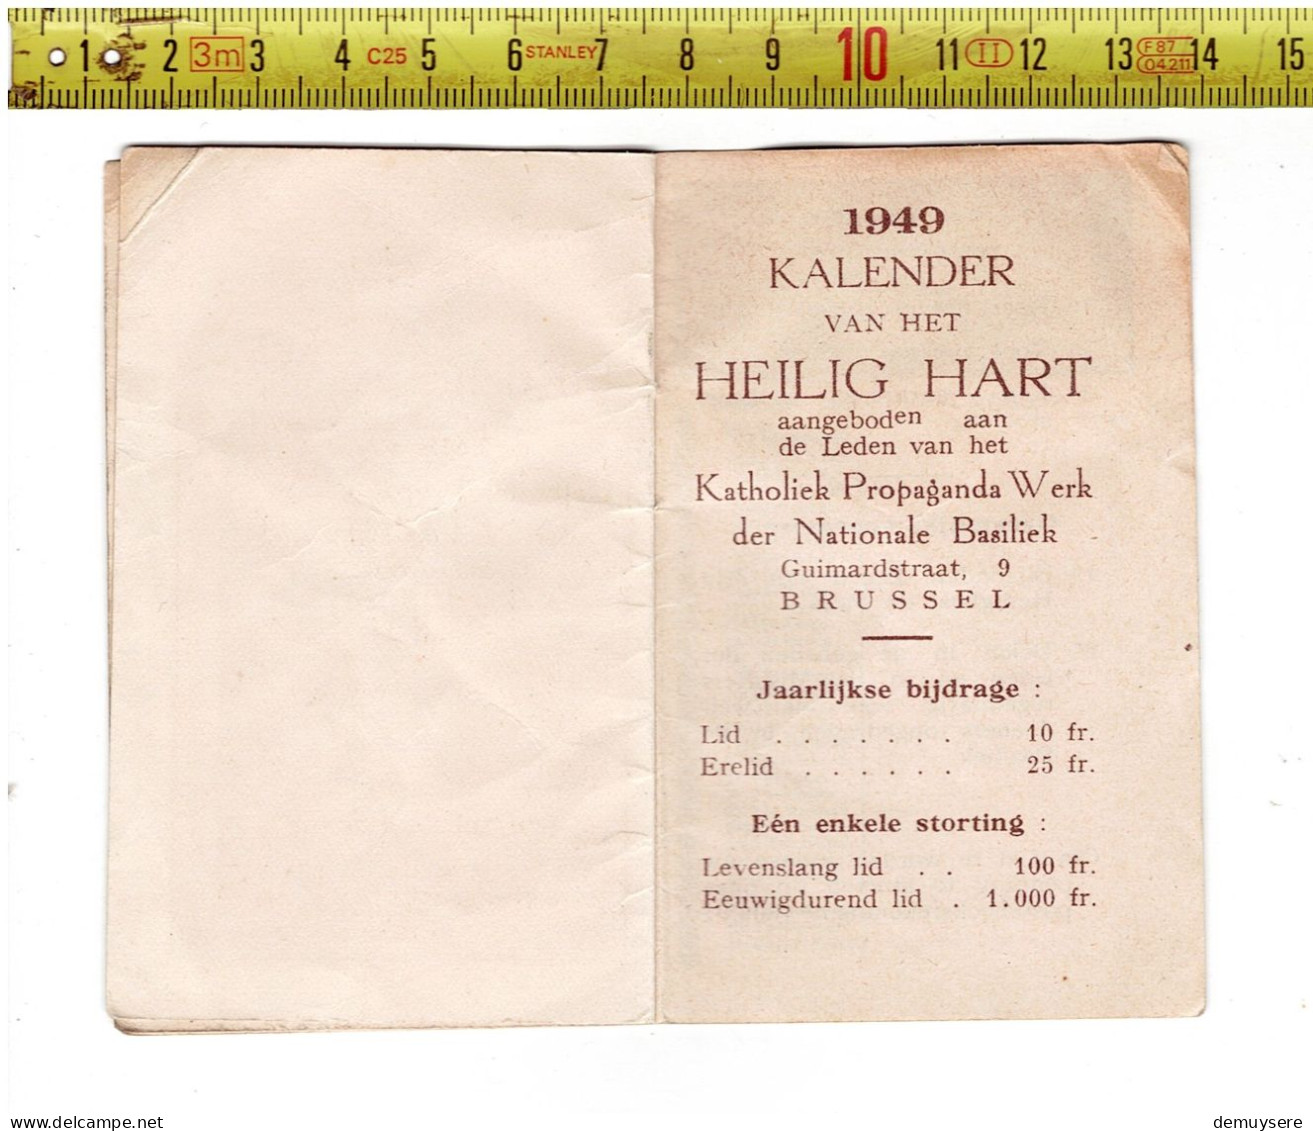 KL 5261 - KALENDER - 1949 - CALENDRIER - KALENDER VAN HET HEILIGE HART - Petit Format : 1921-40